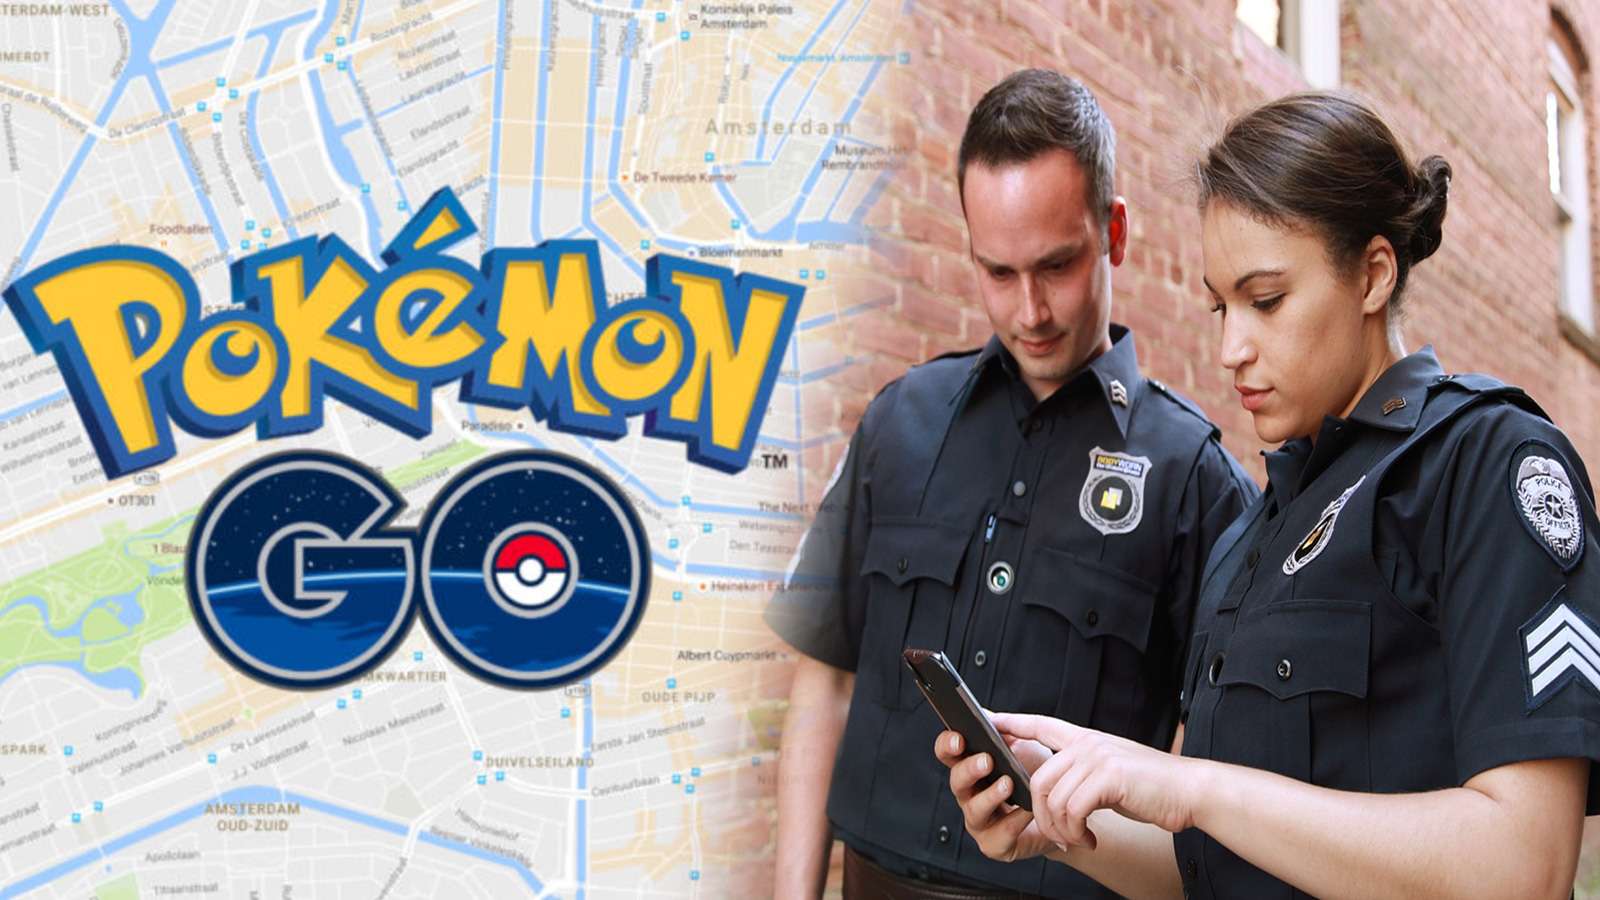 Pokemon Go logo next to police officers.